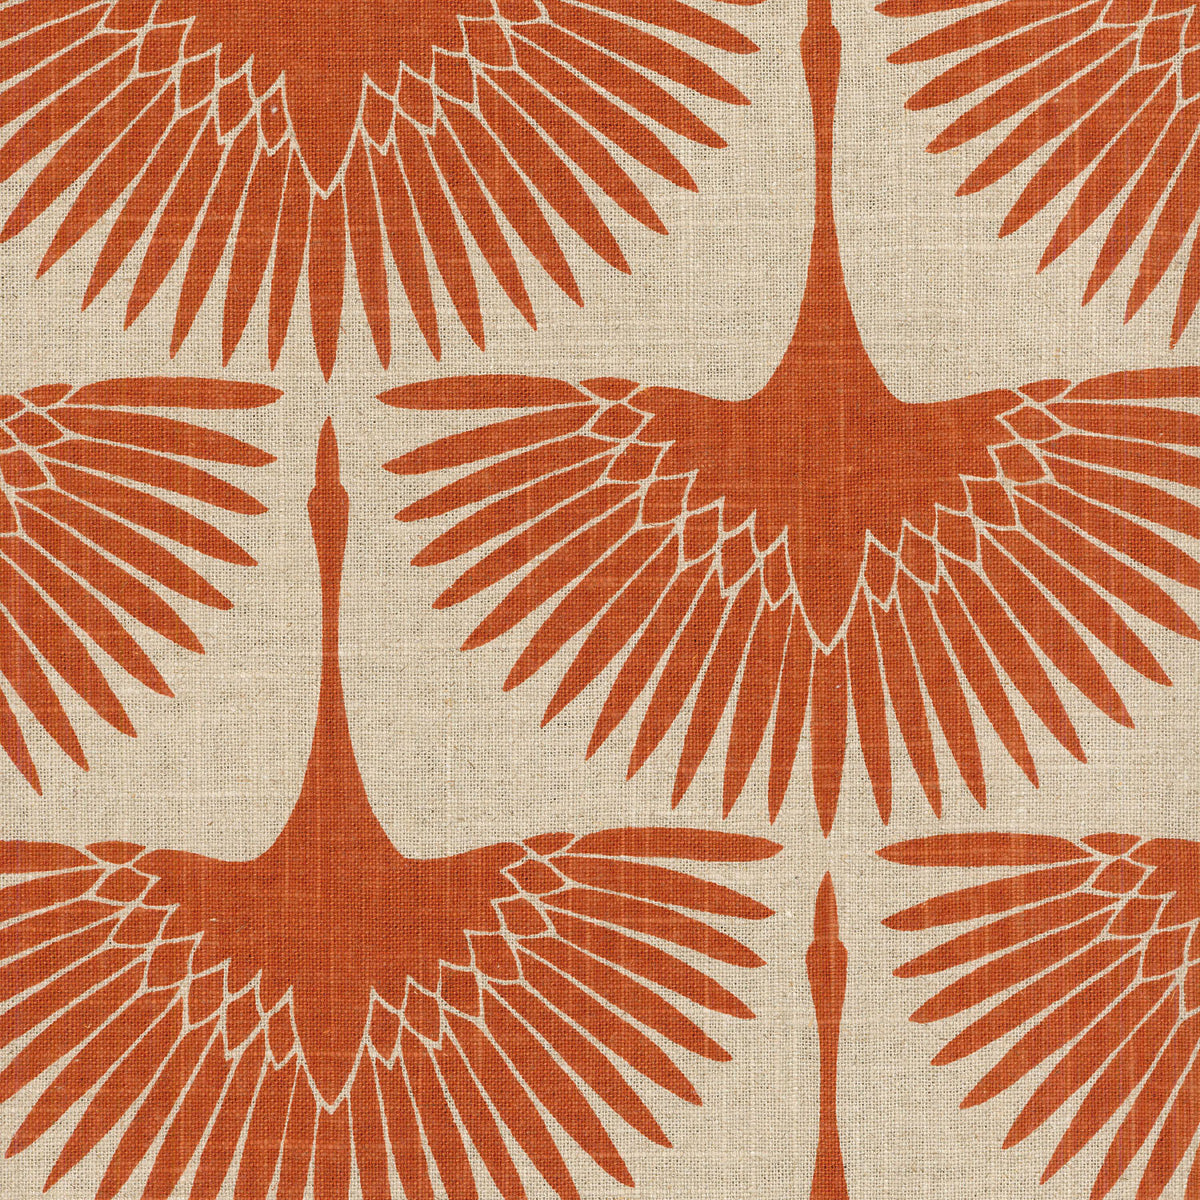 Genevieve Gorder Flock Circa - Tiger Lily 450061 Fabric Swatch